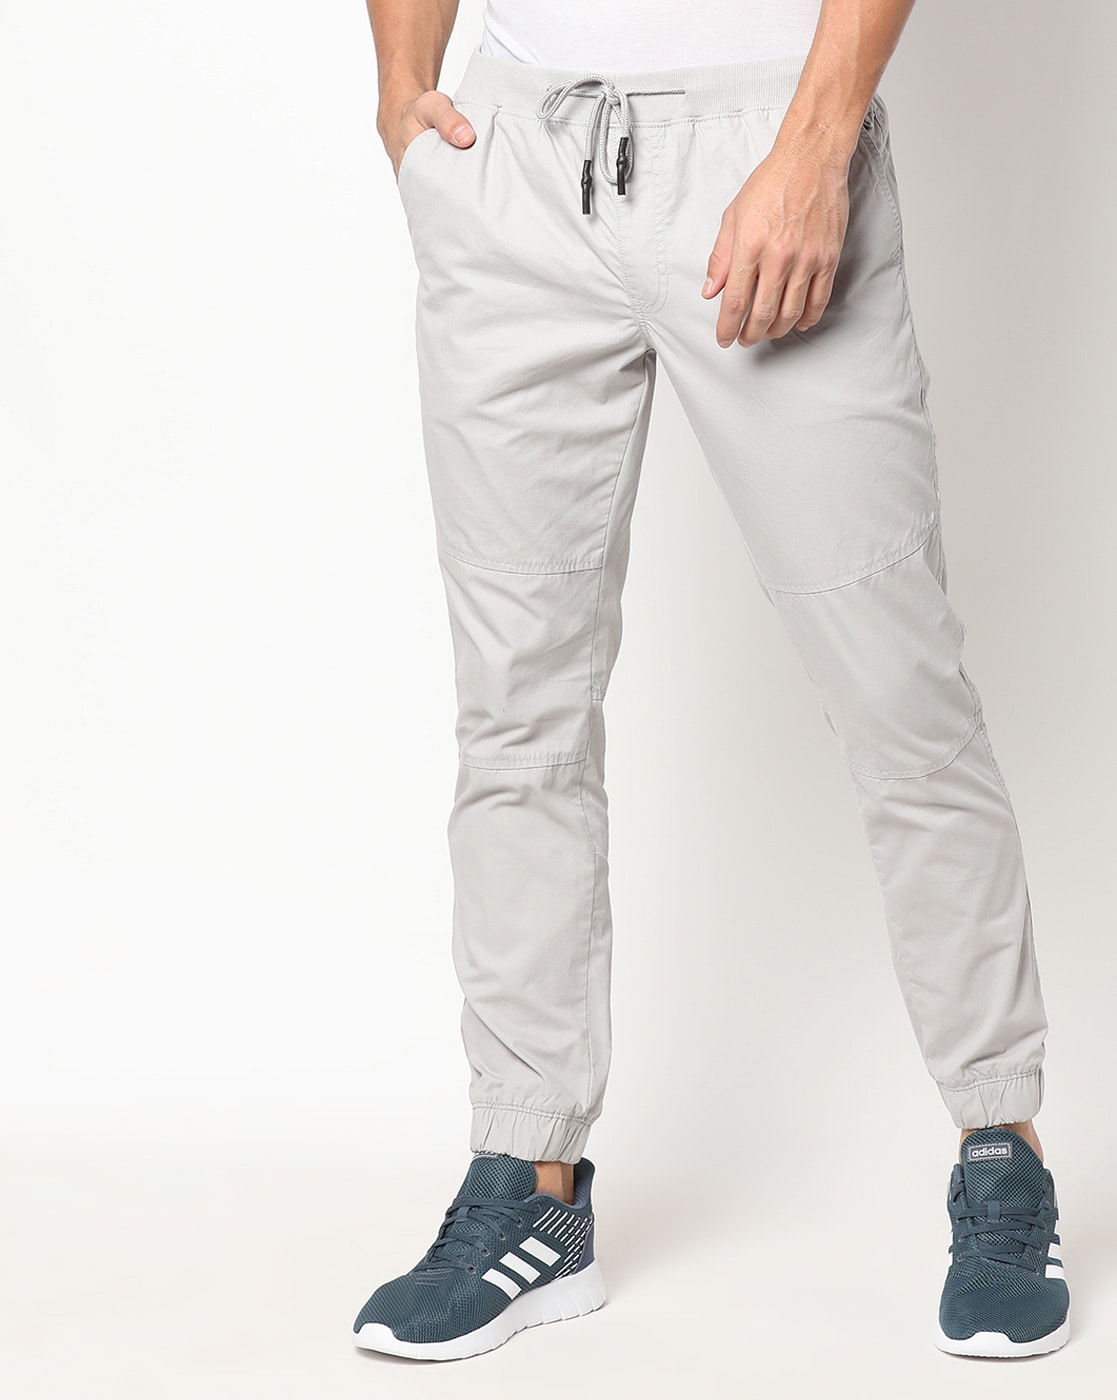 Buy Grey Track Pants for Men by DNMX Online  Ajiocom